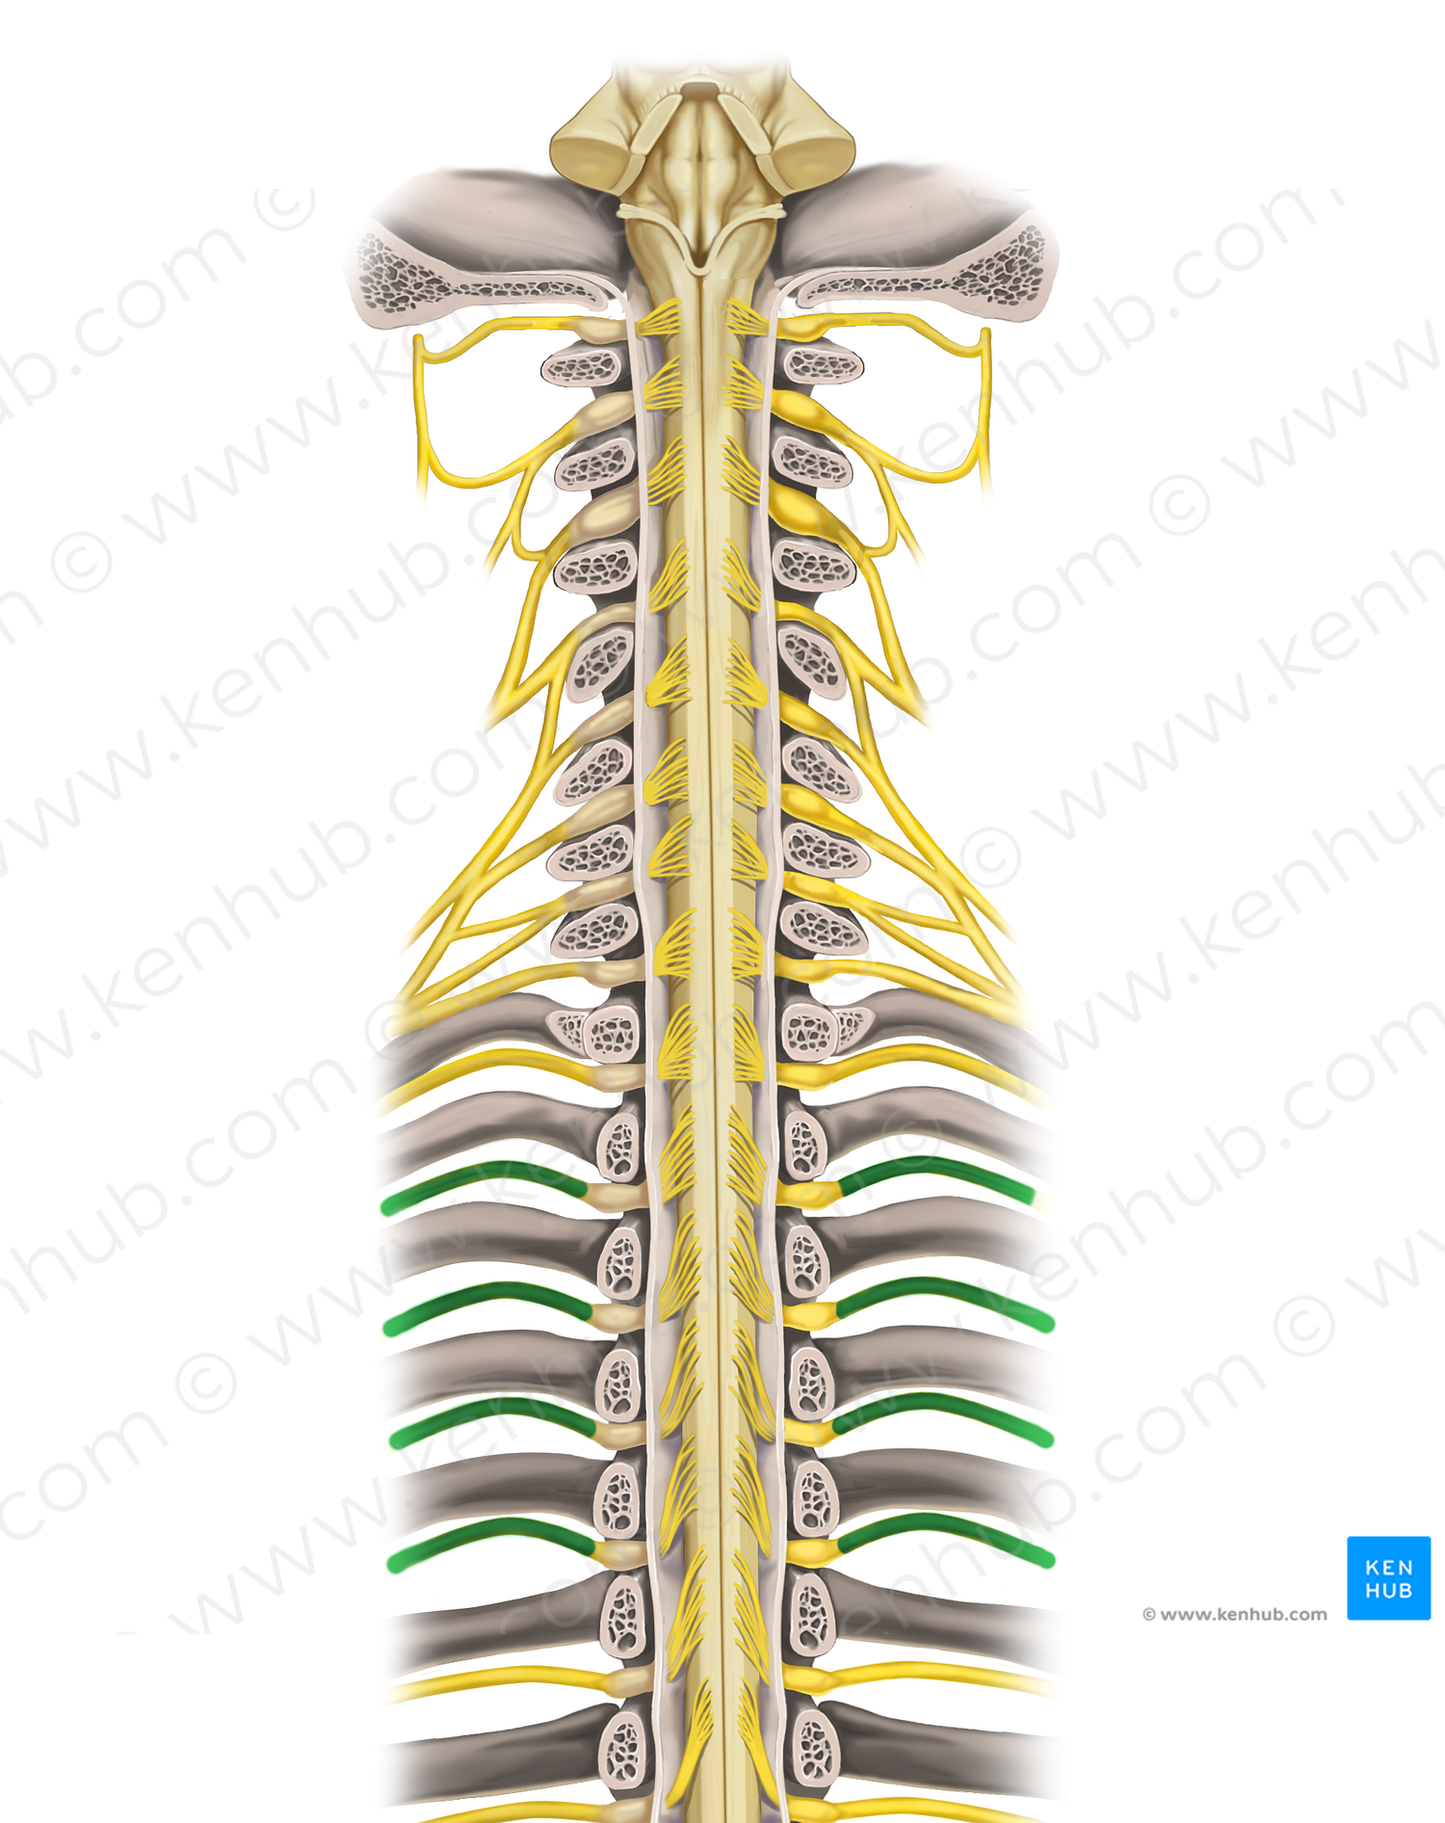 2nd-5th intercostal nerves (#18427)